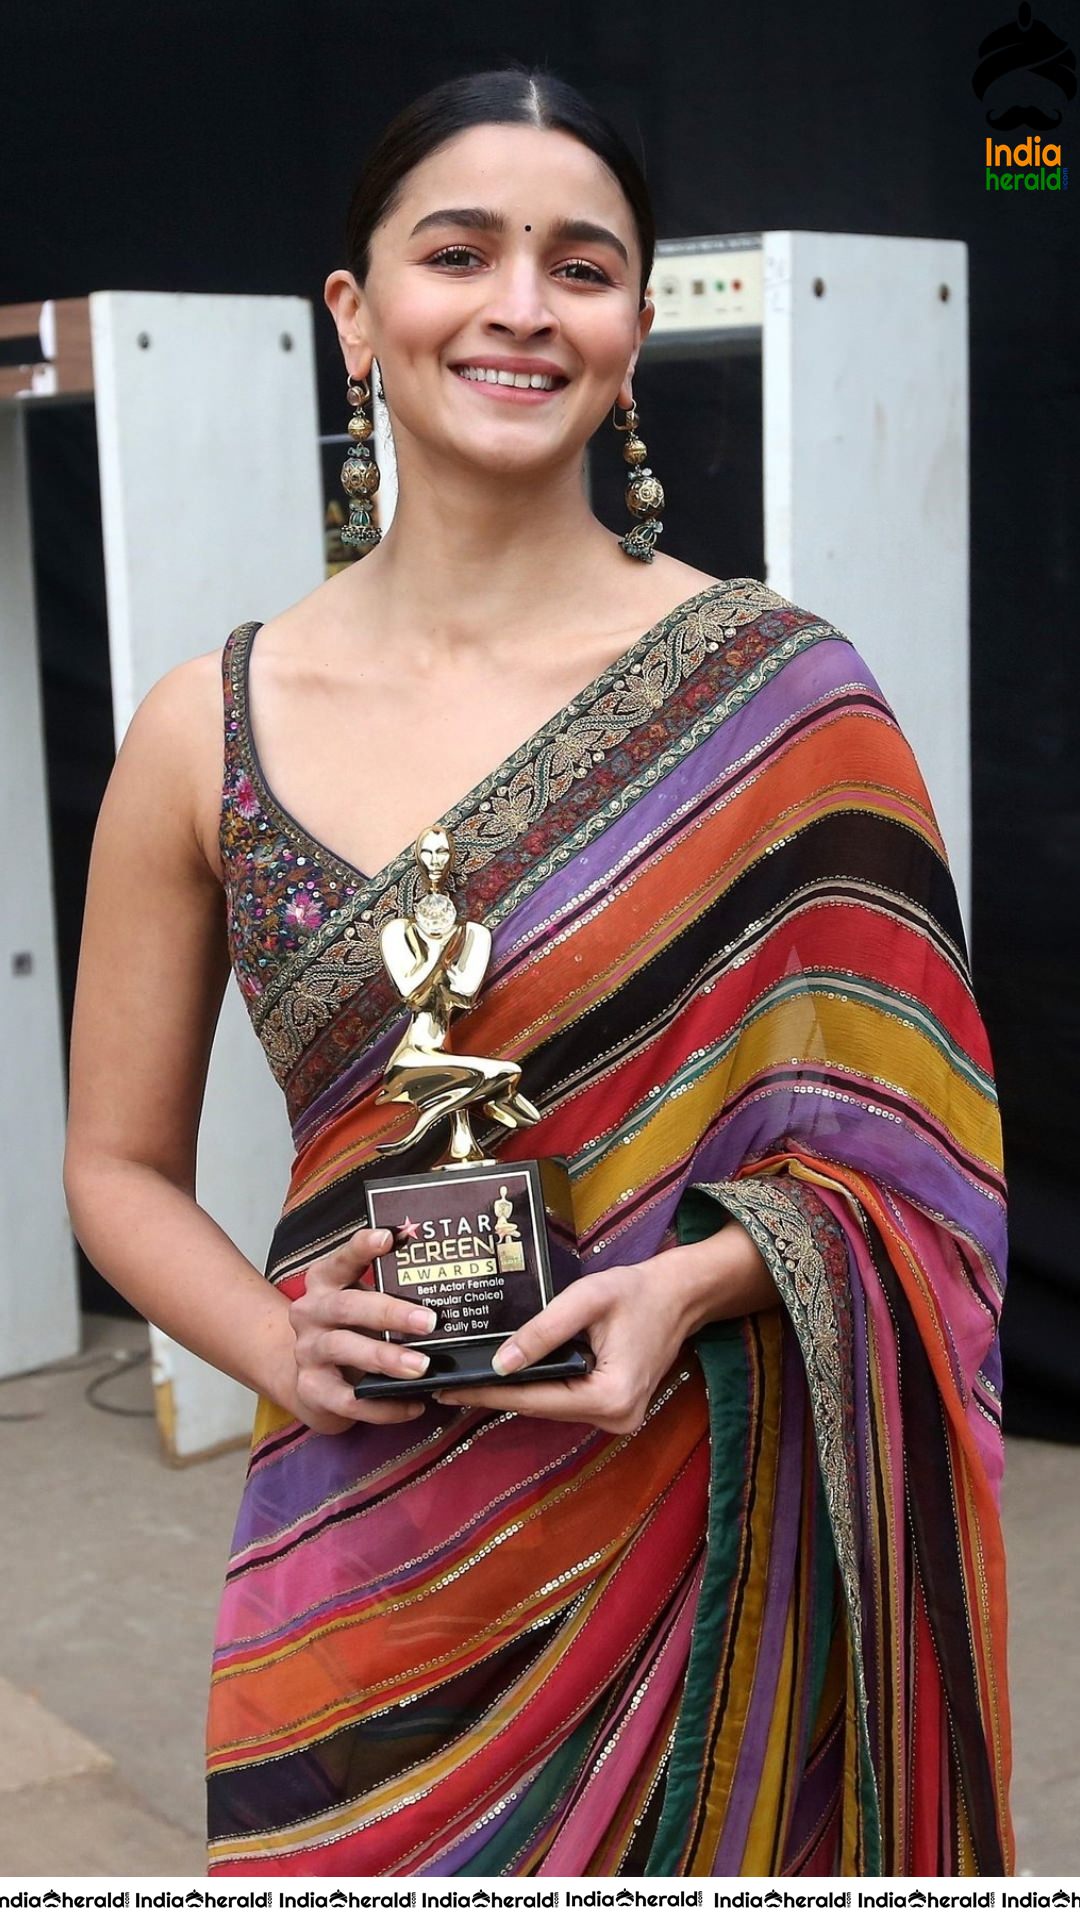 Alia Bhatt Hot in Sleeveless Blose and Saree at an Award Show